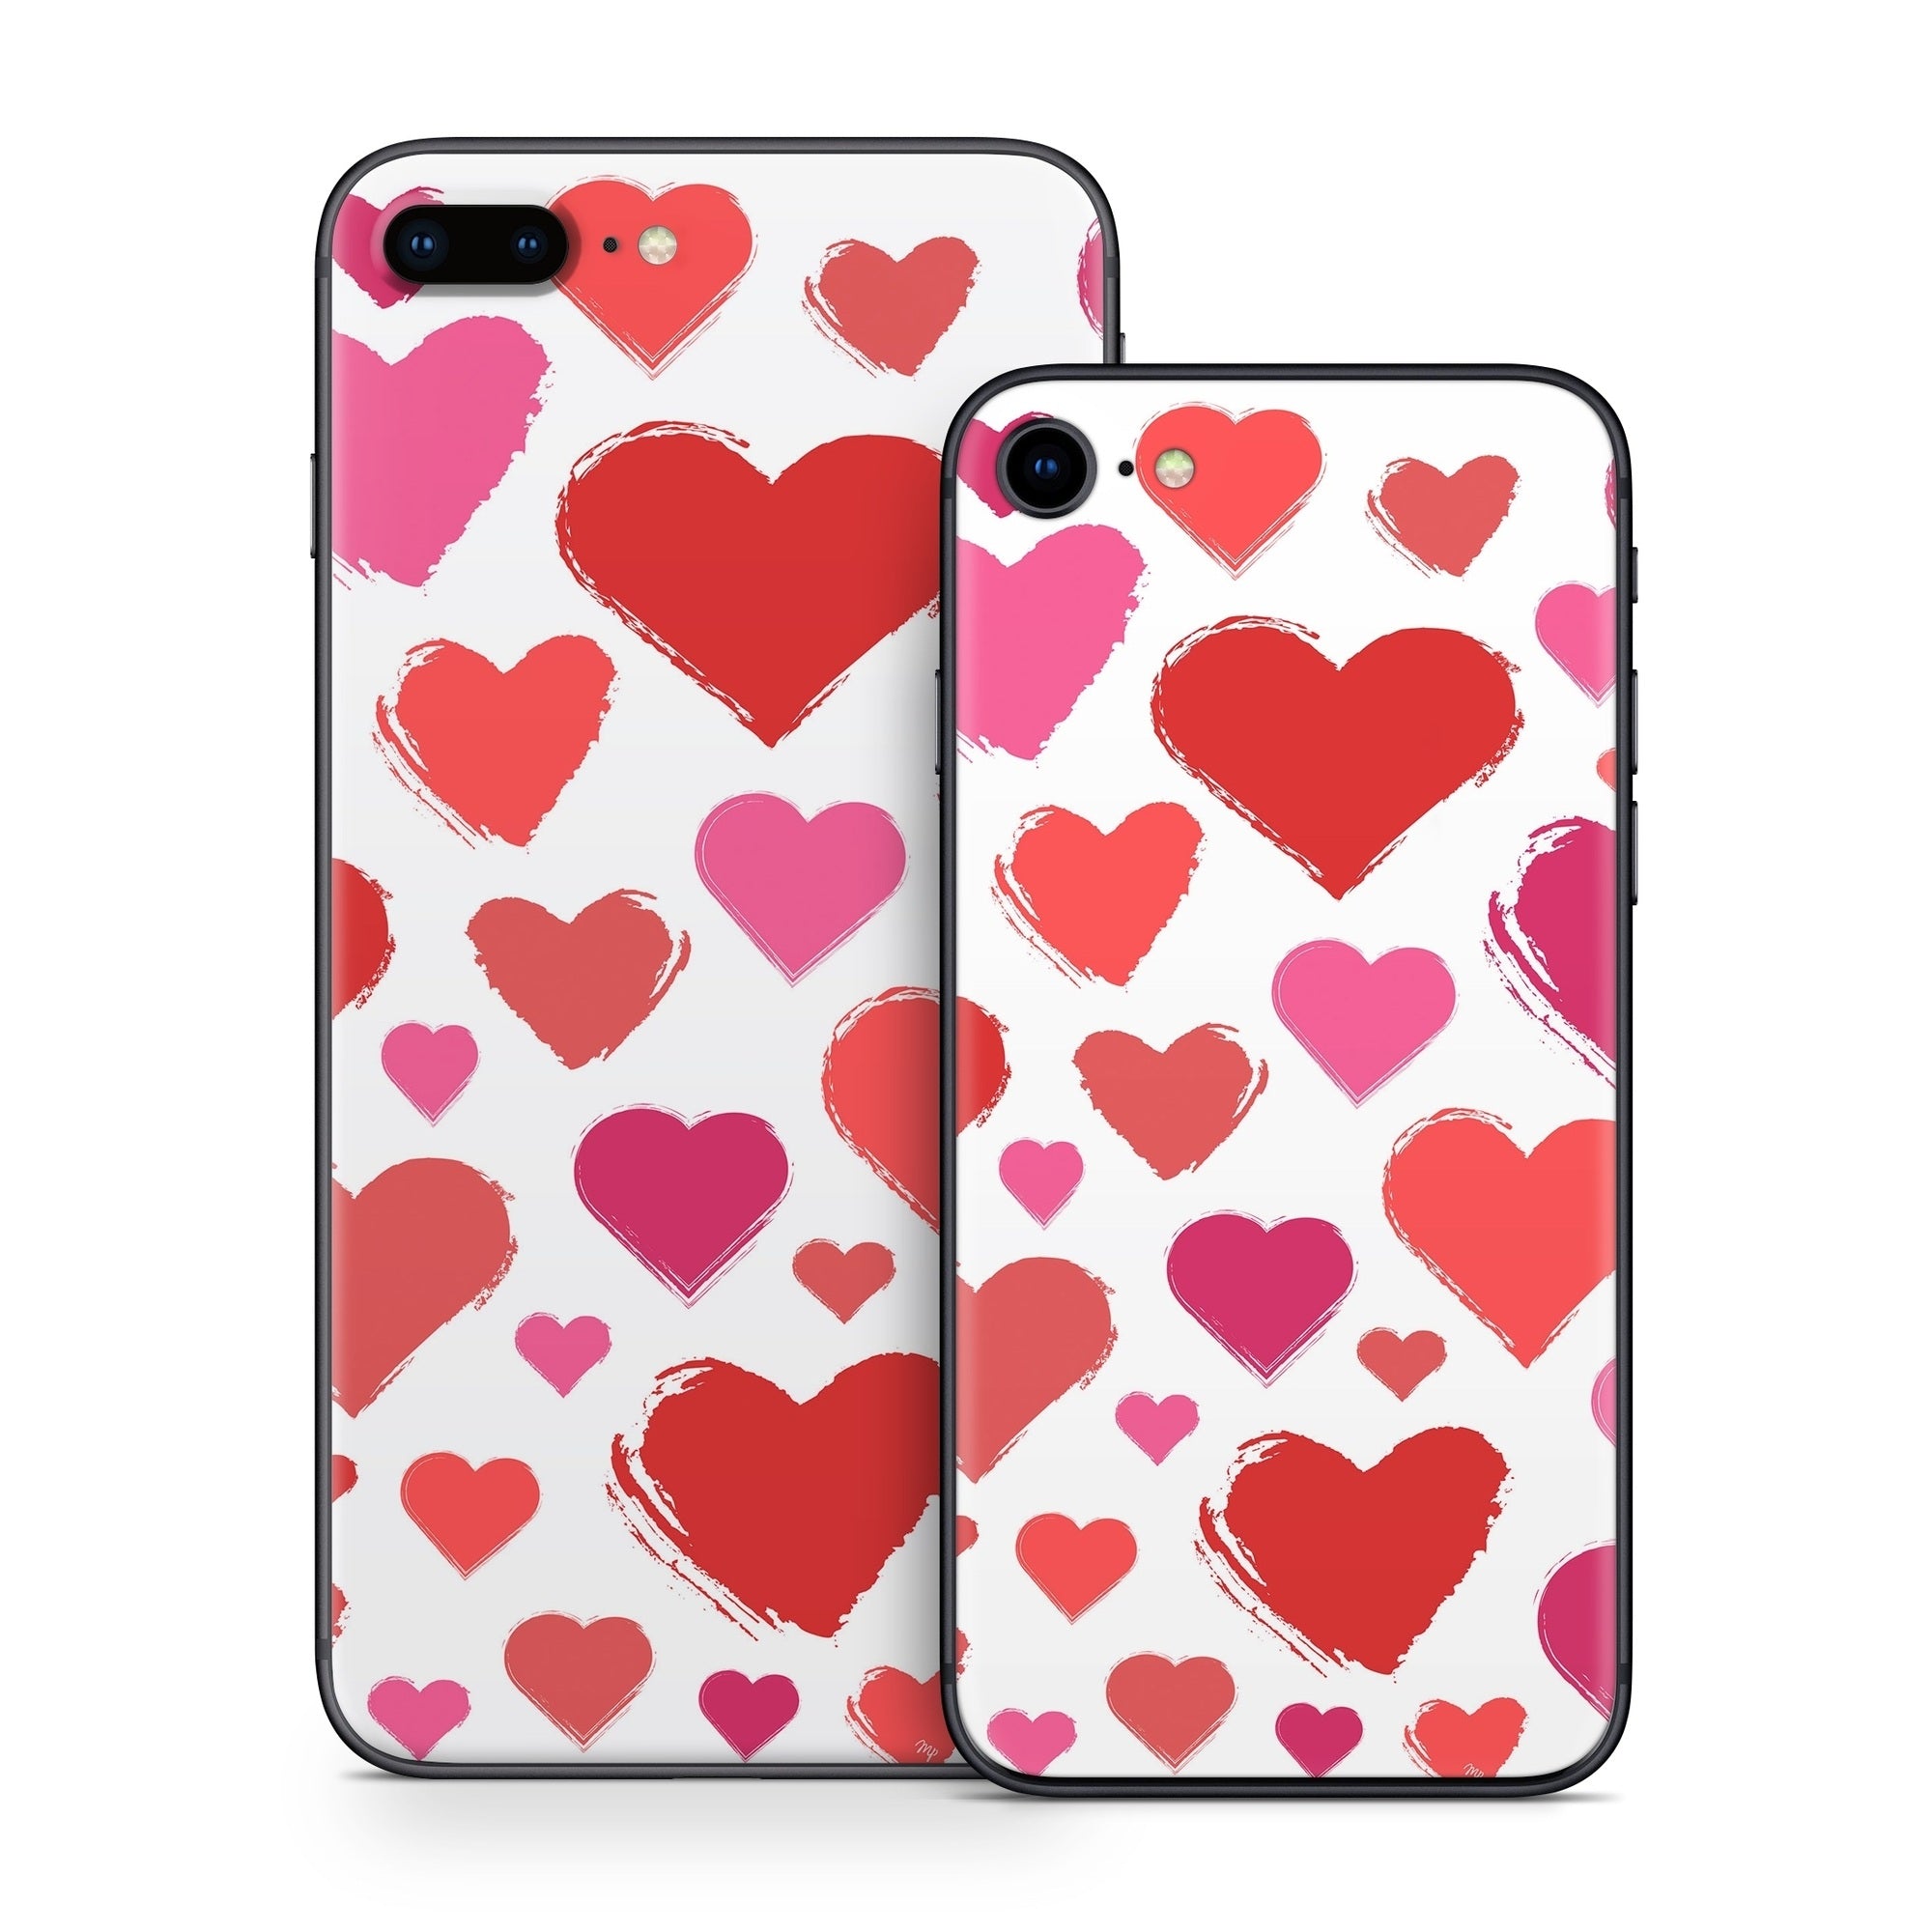 Hearts - Apple iPhone 8 Skin